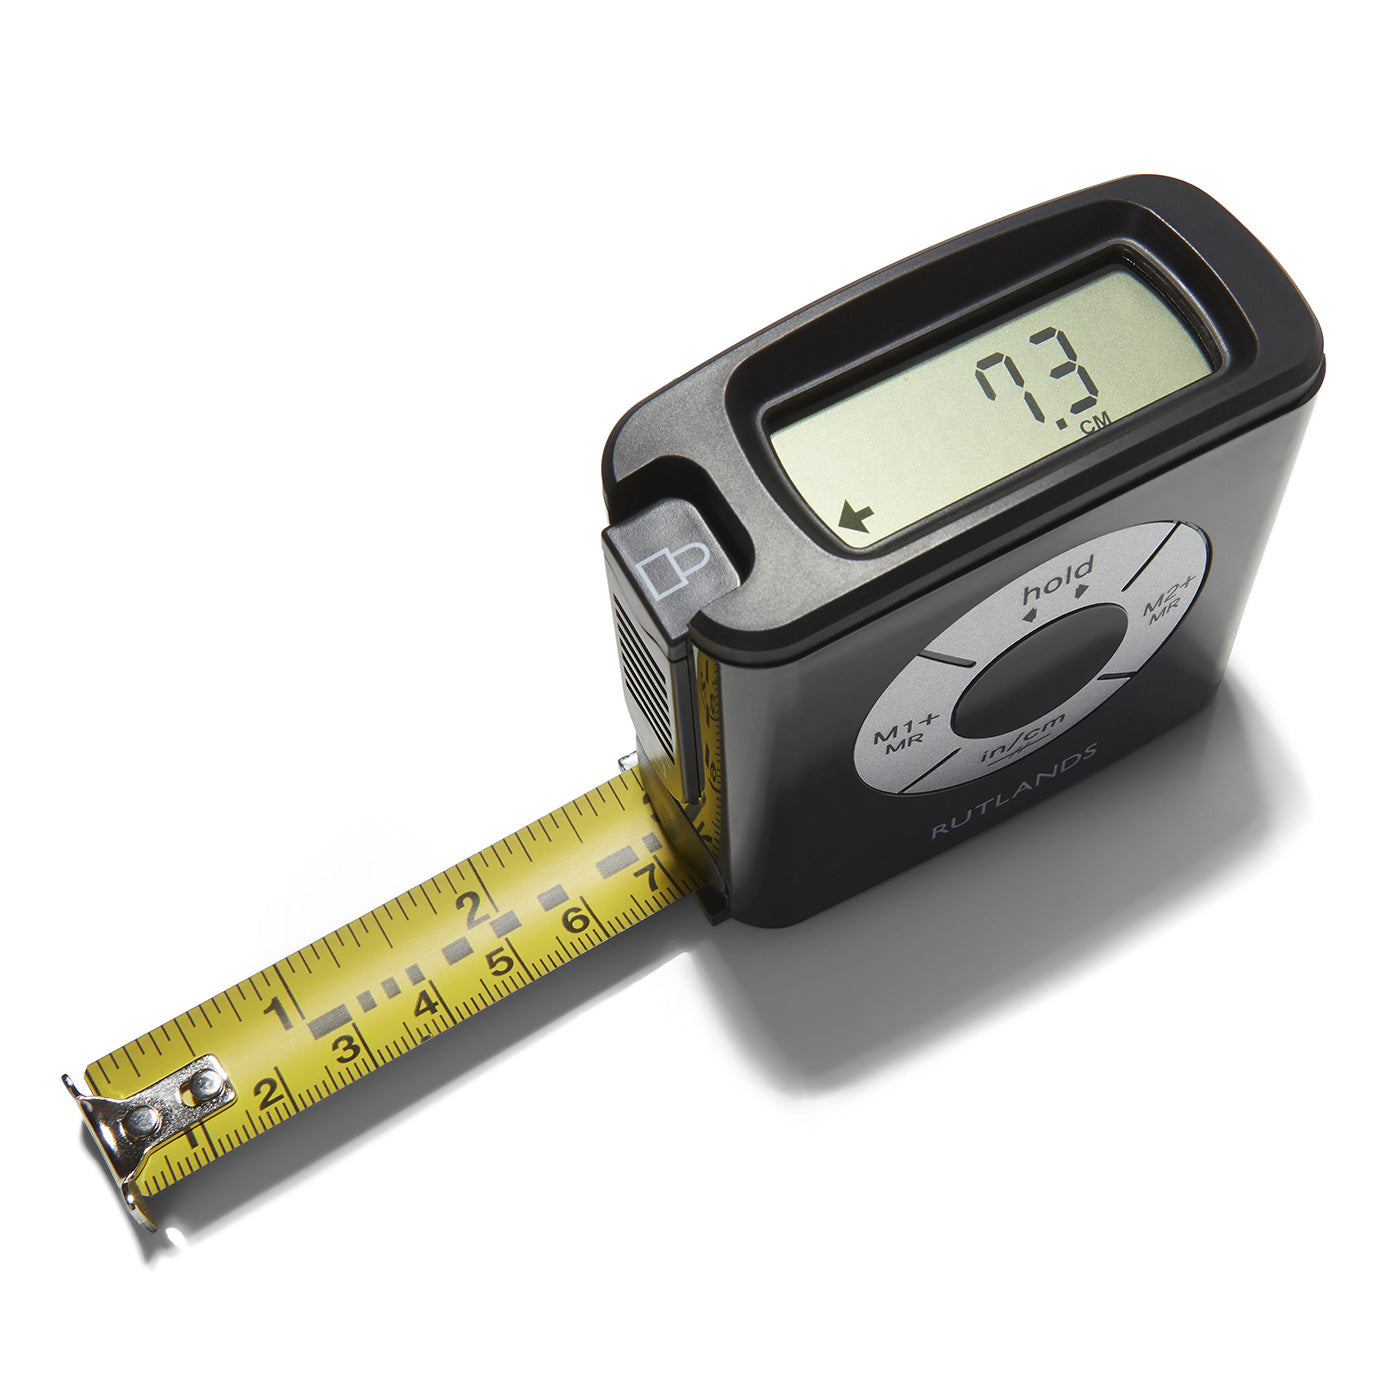 PGII - The Original Perfect Grip Steel Tape Measure - 25ft